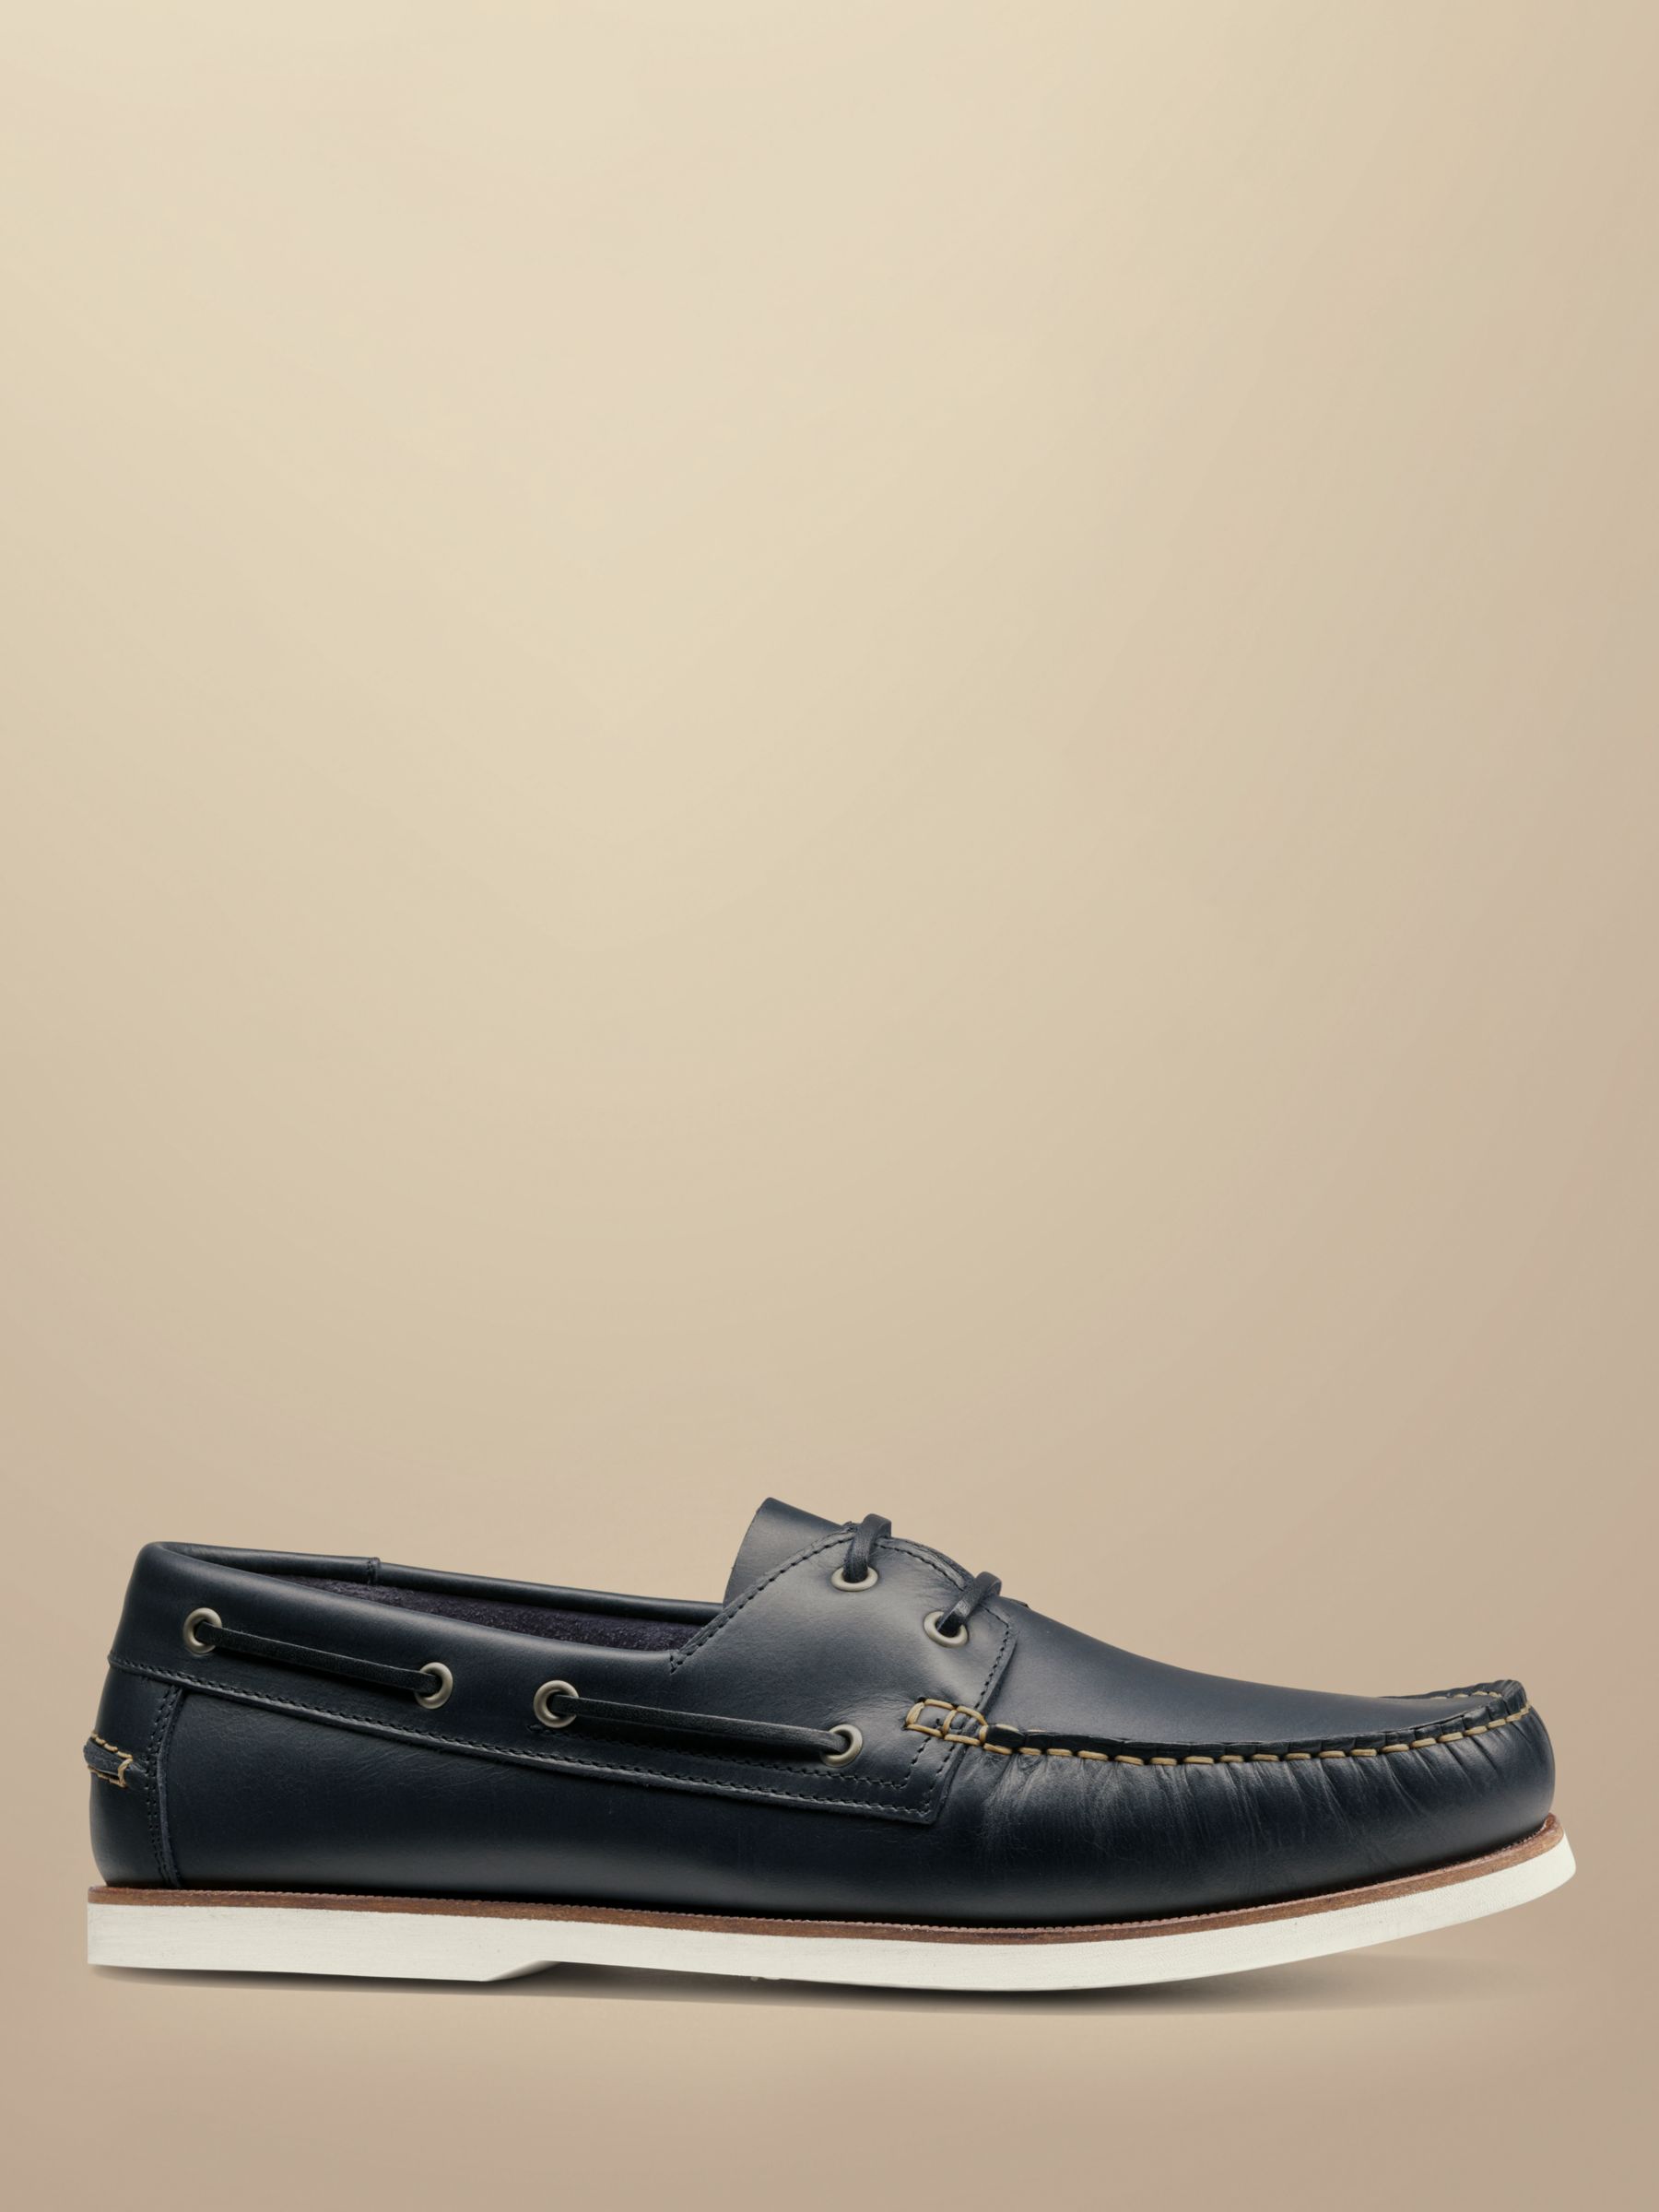 Charles Tyrwhitt Leather Boat Shoes, Dark Navy, 9